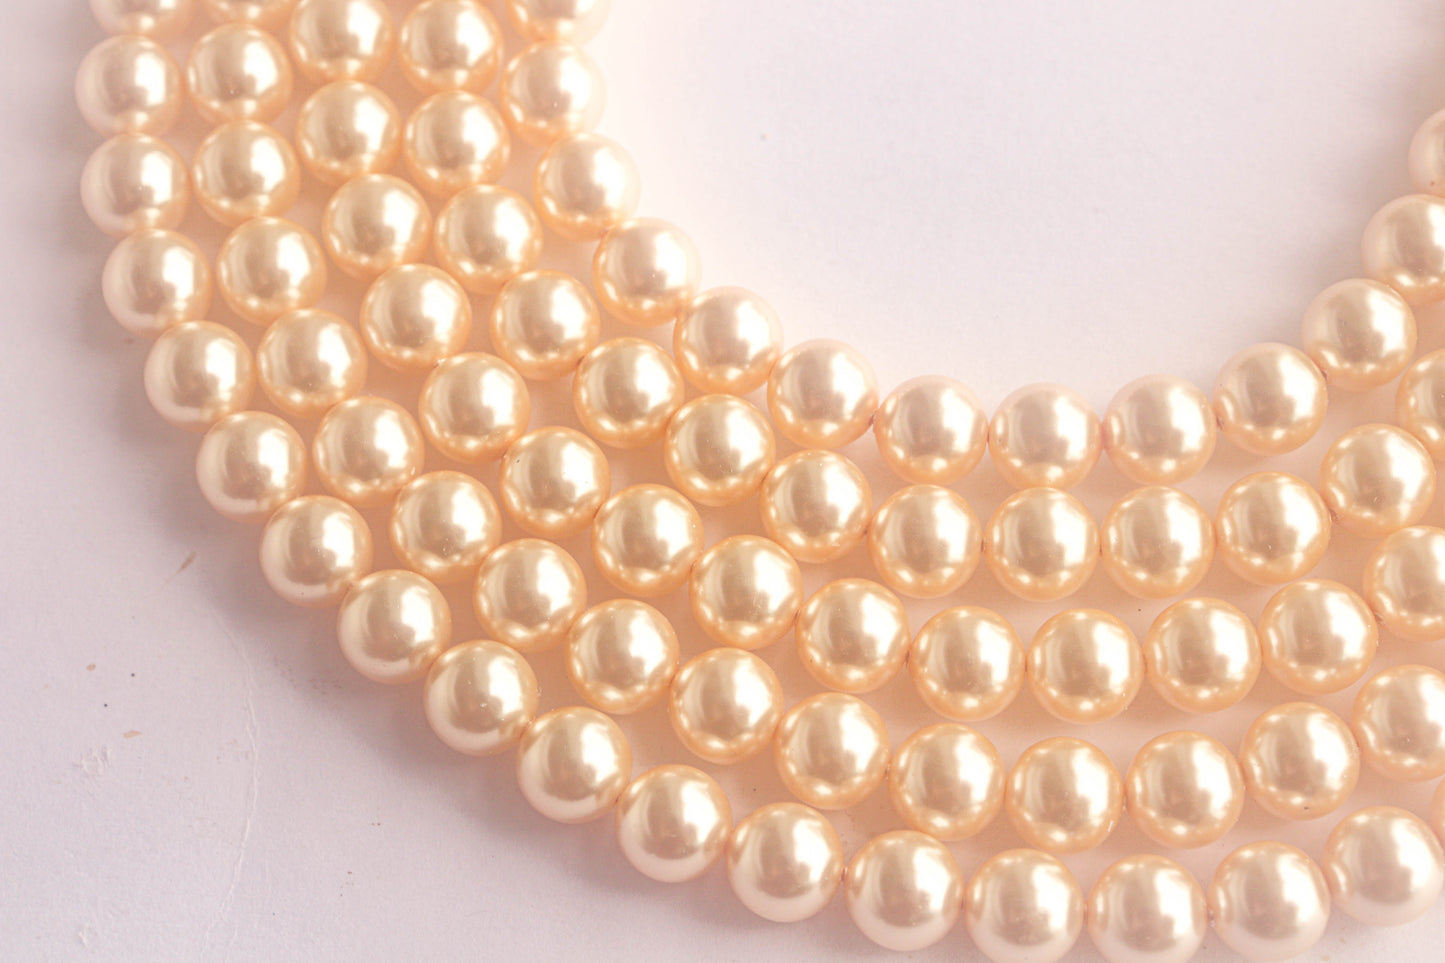 2mm Crystal Light Gold (001 539) Genuine Swarovski 5810 Pearls Round Beads Beadsforyourjewelry